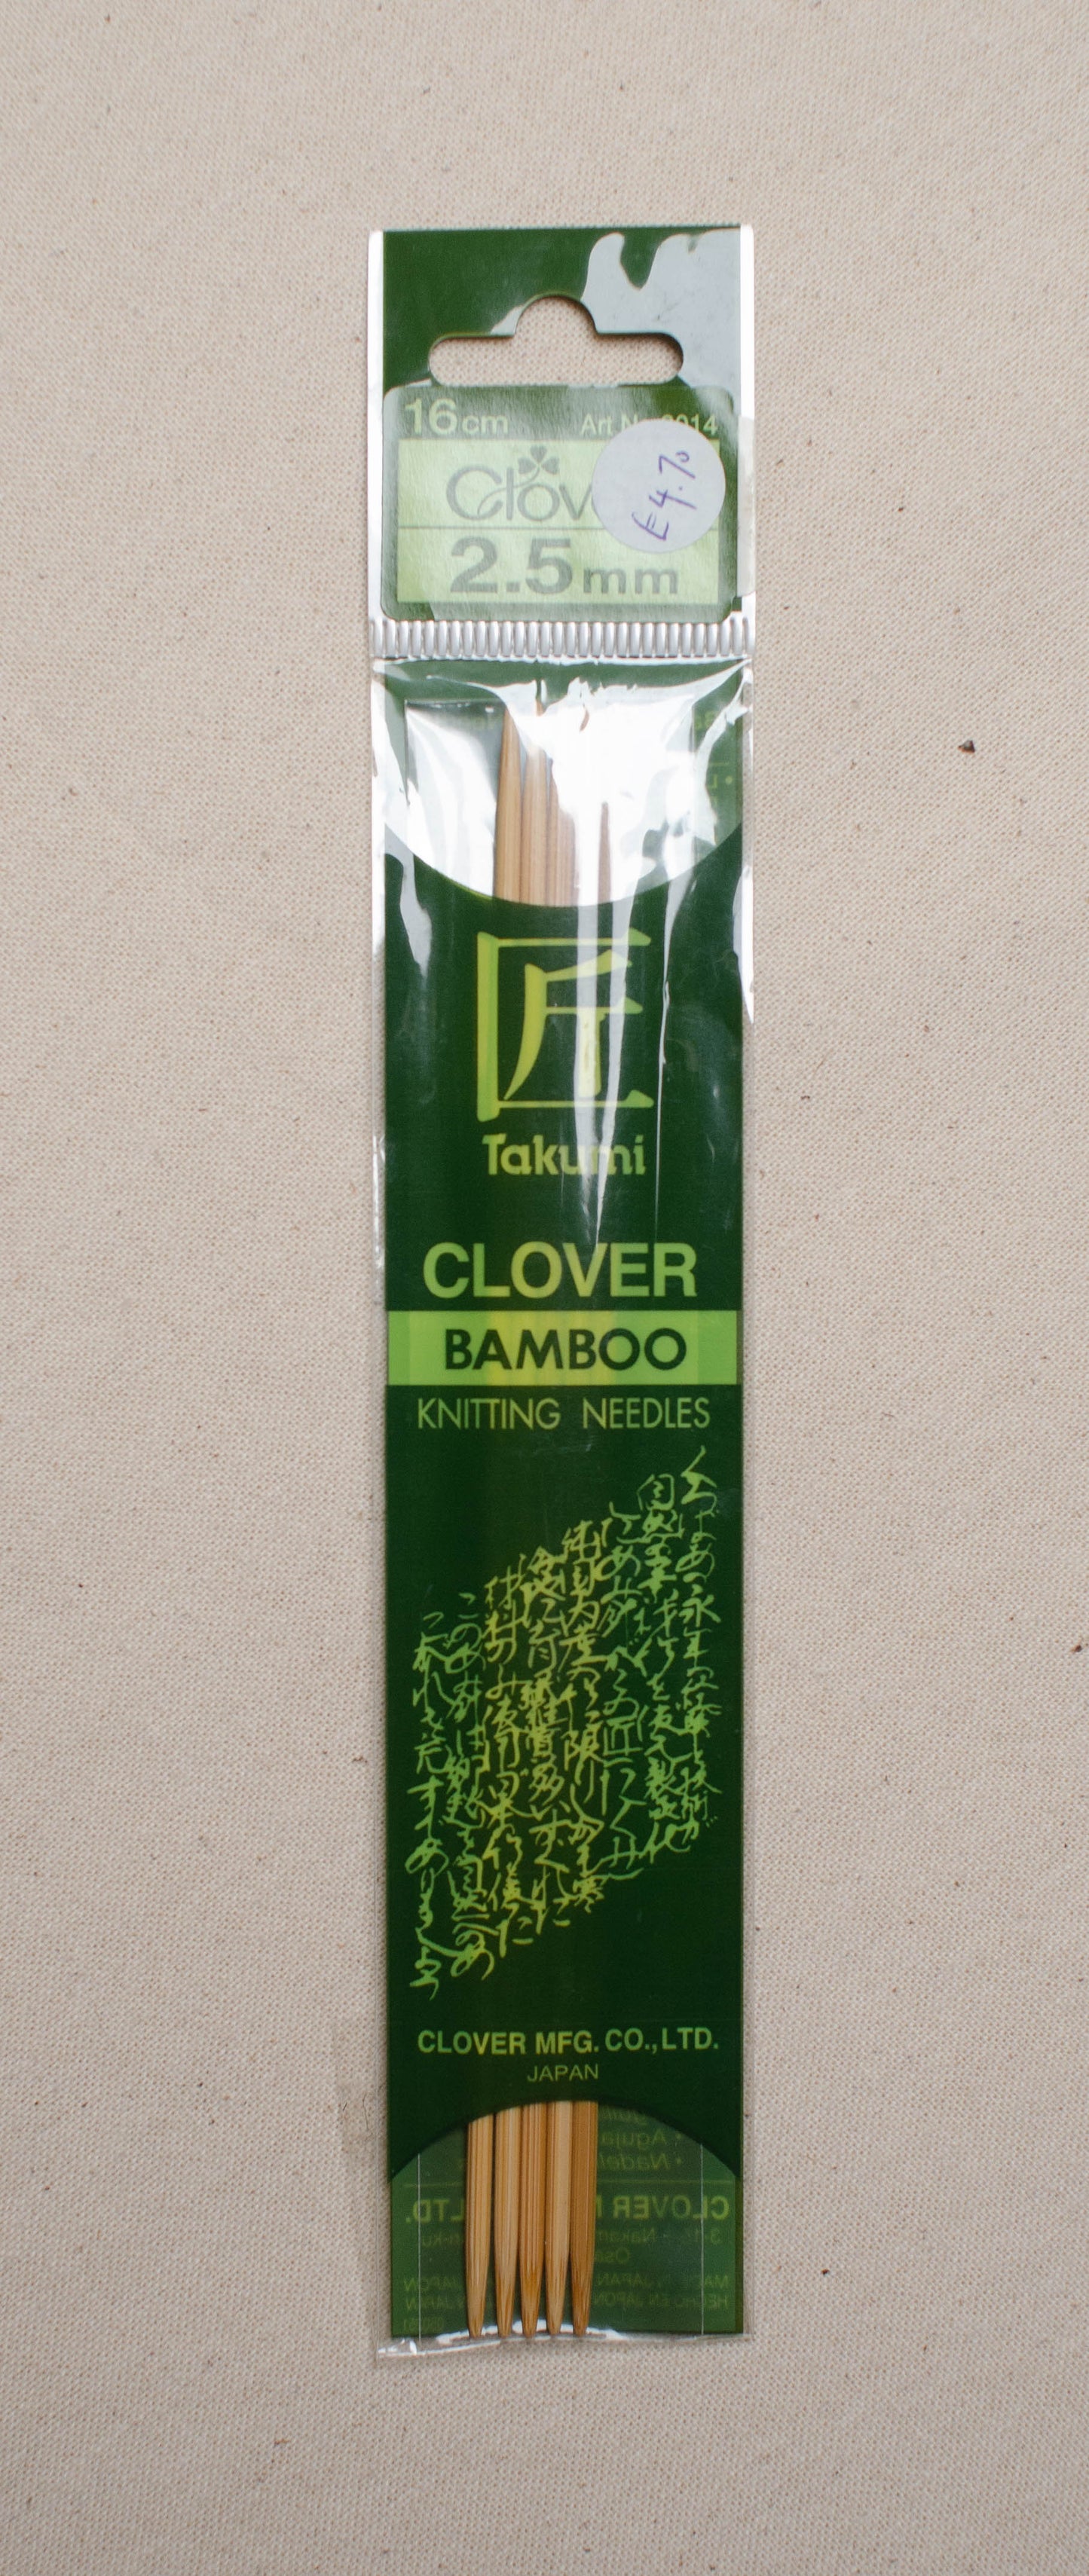 Clover 16cm Double Point Knitting Needles - 16cm X 2.5mm